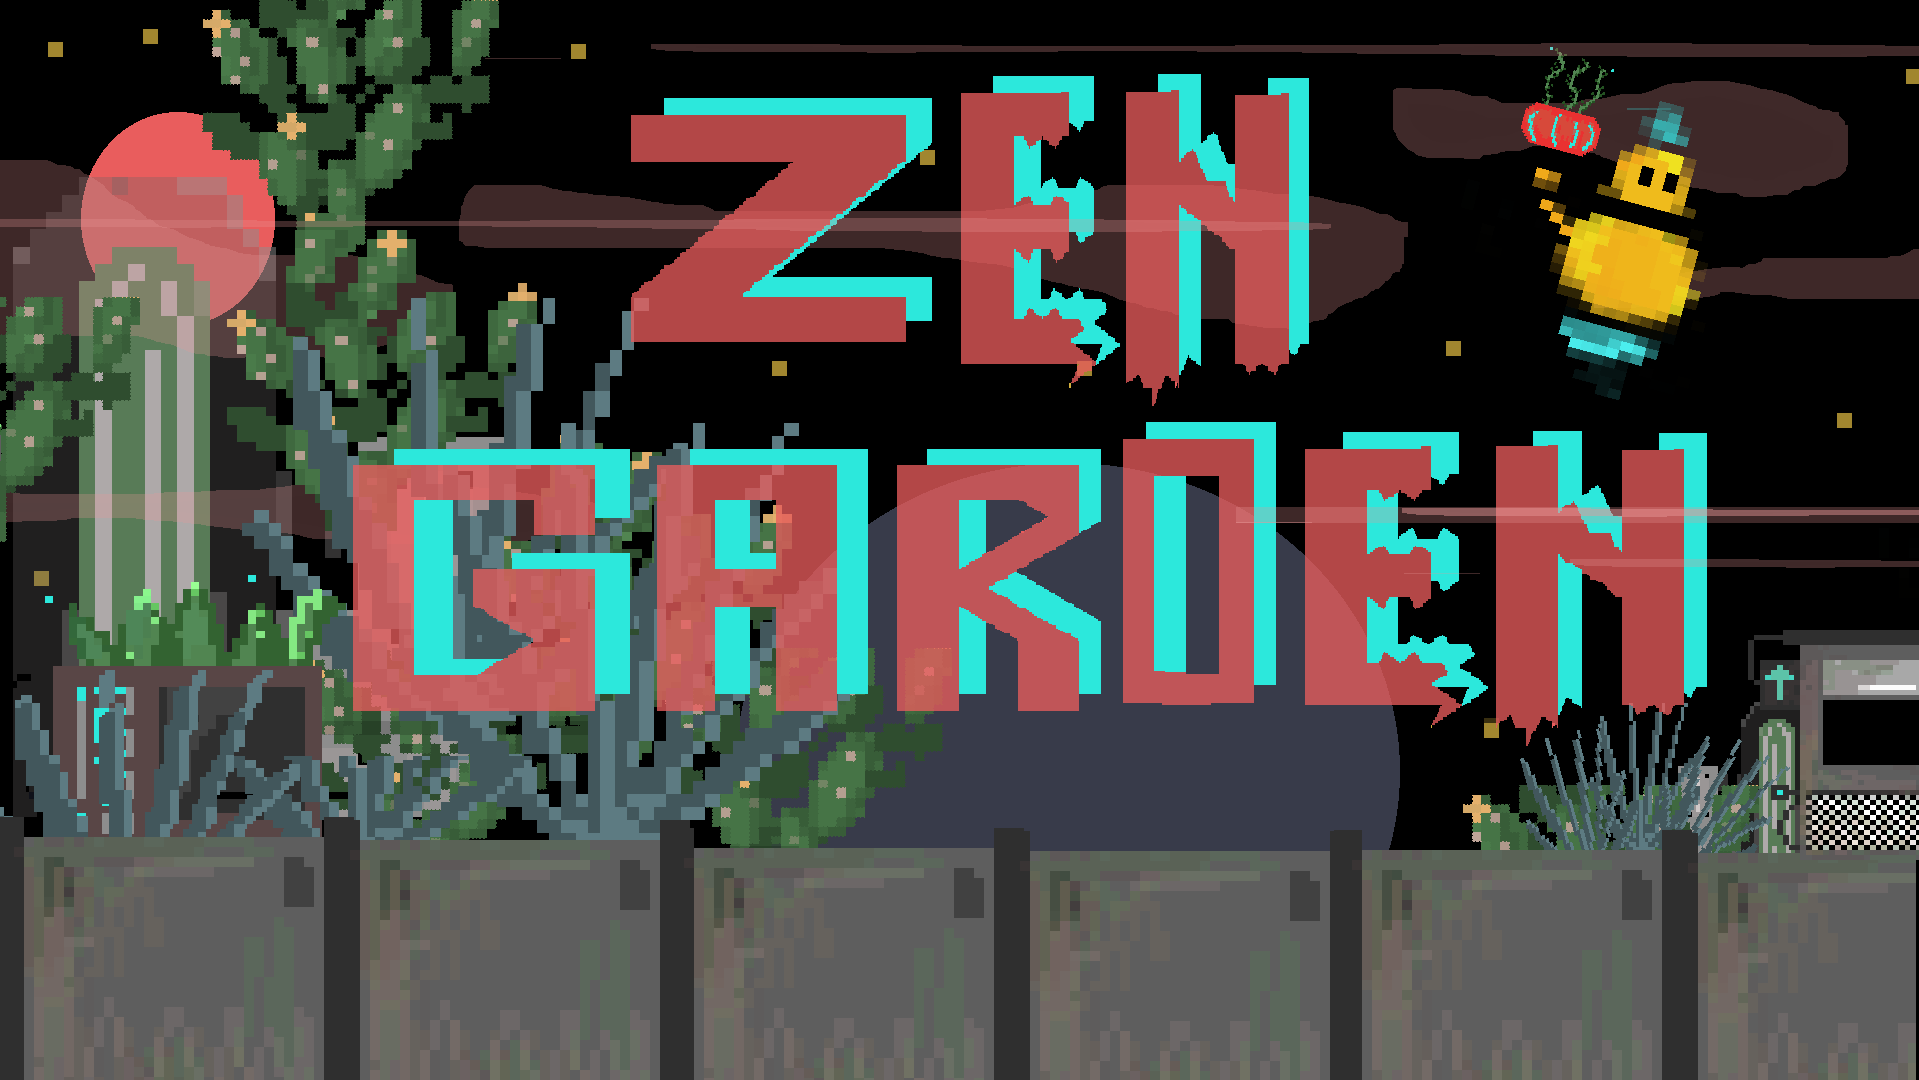 Zen Garden By Sai Narayan For Gmtk Game Jam 2019 Itch Io